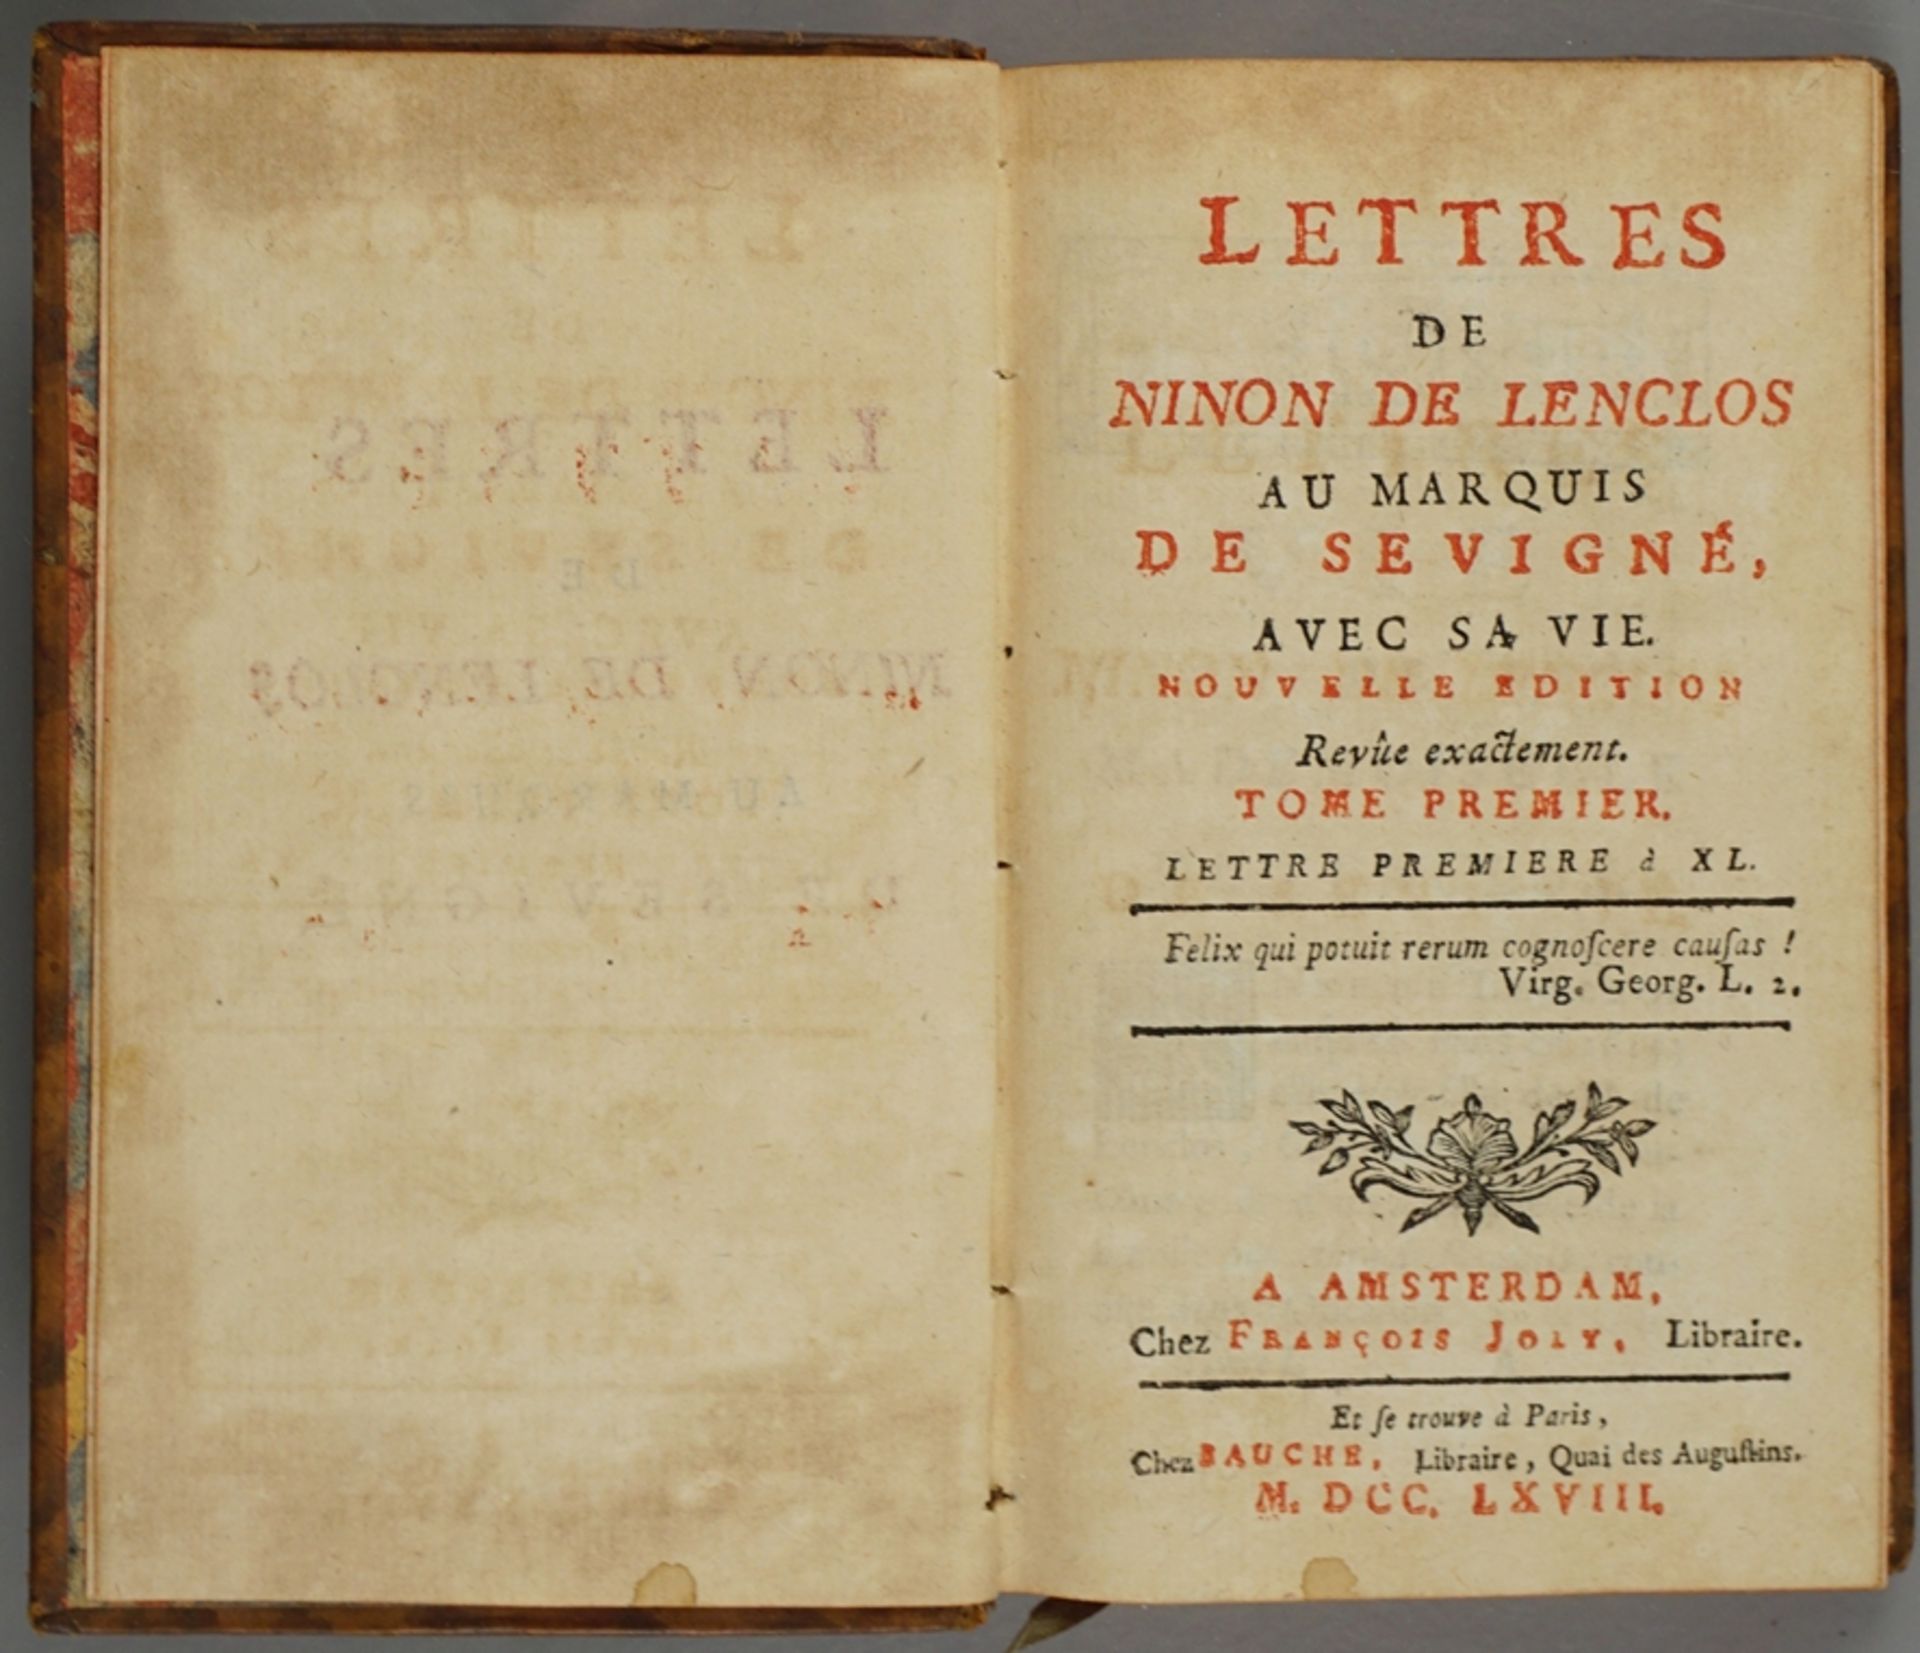 "Lettres de Ninon de Lenclos au marquis de Sévigné", 1768, 2 Bde.